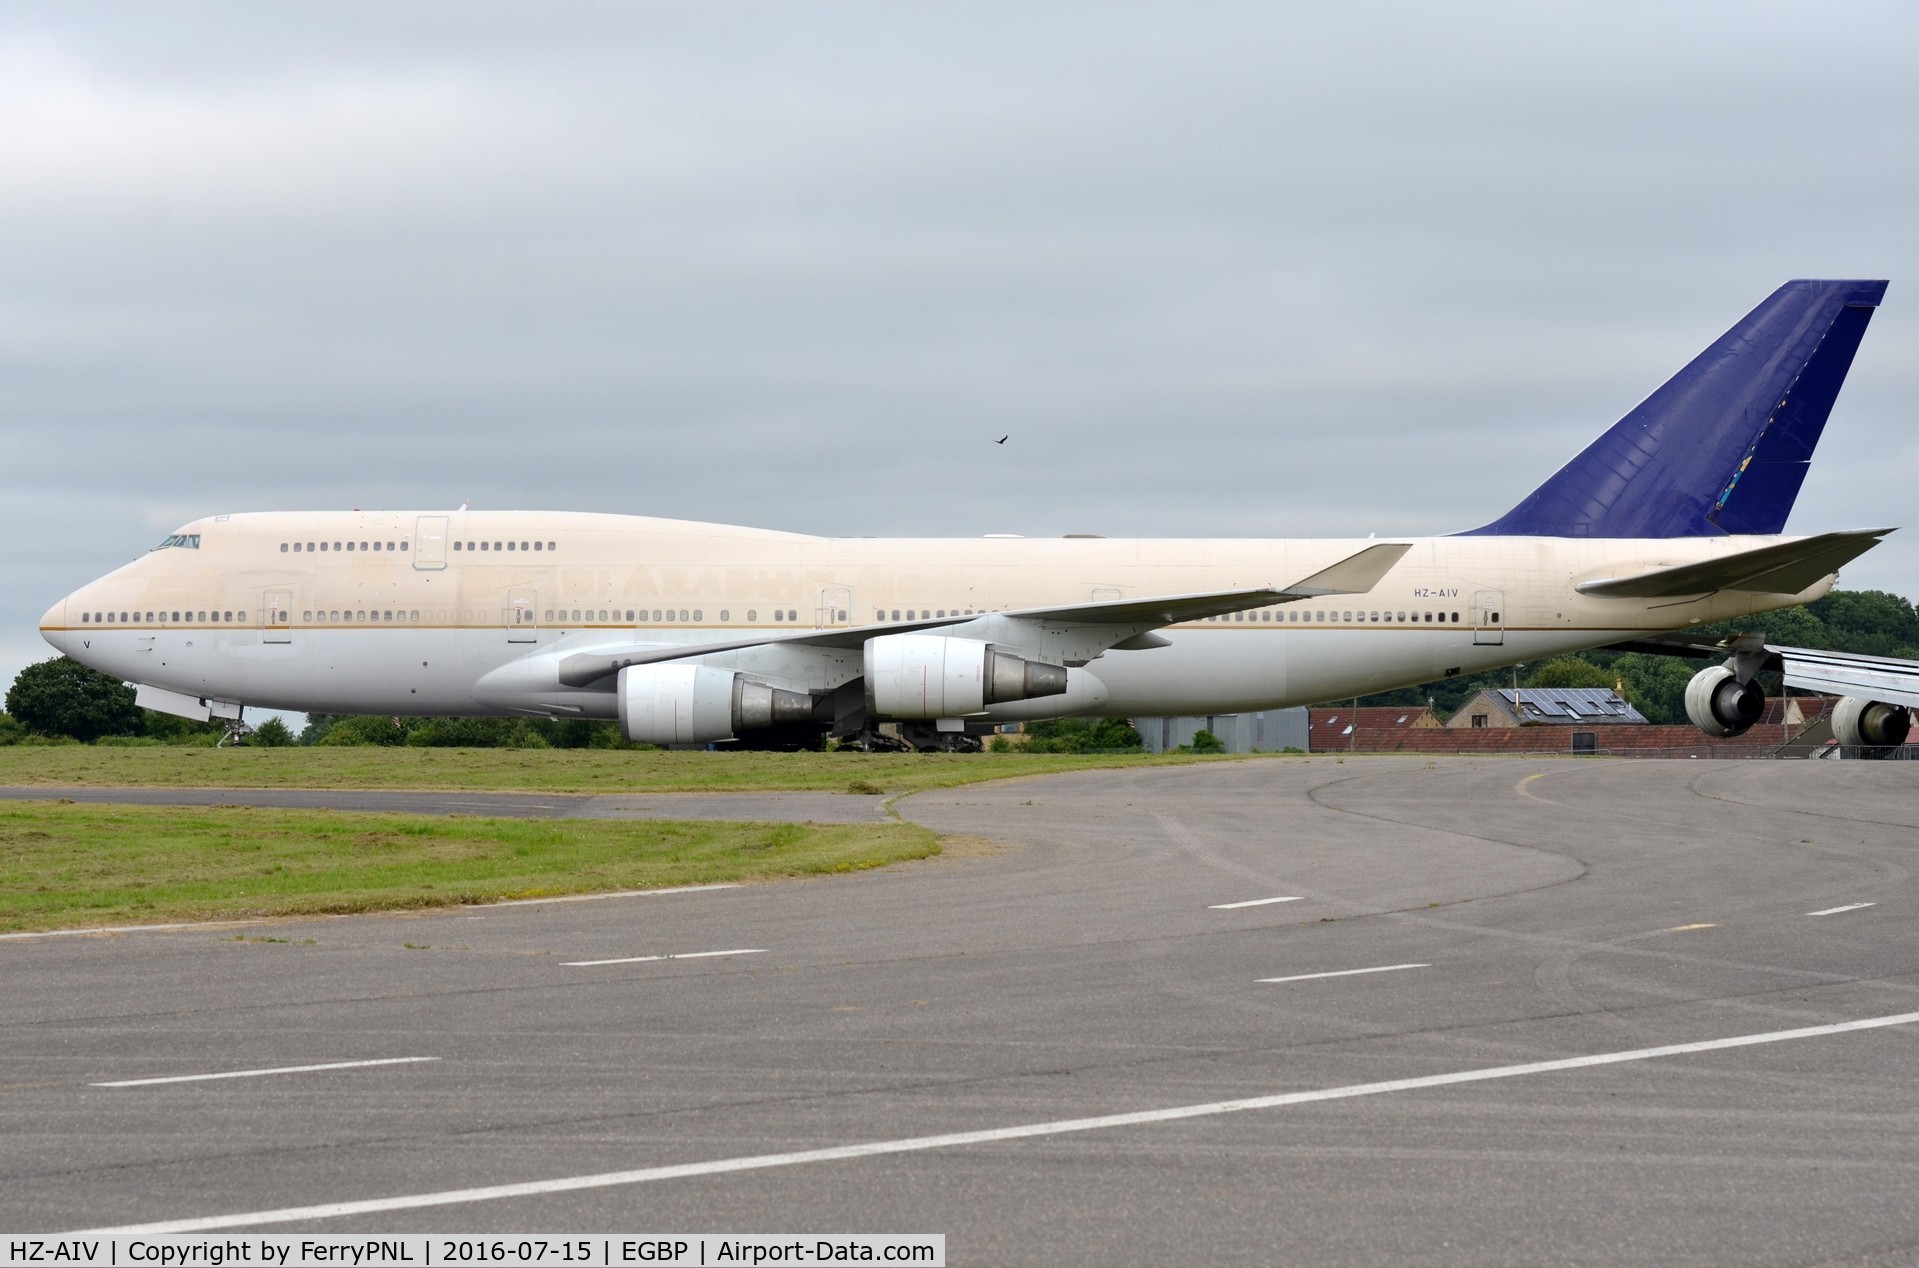 HZ-AIV, 1997 Boeing 747-468 C/N 28339, Former Saudi B744 stll in one piece in Kemble.